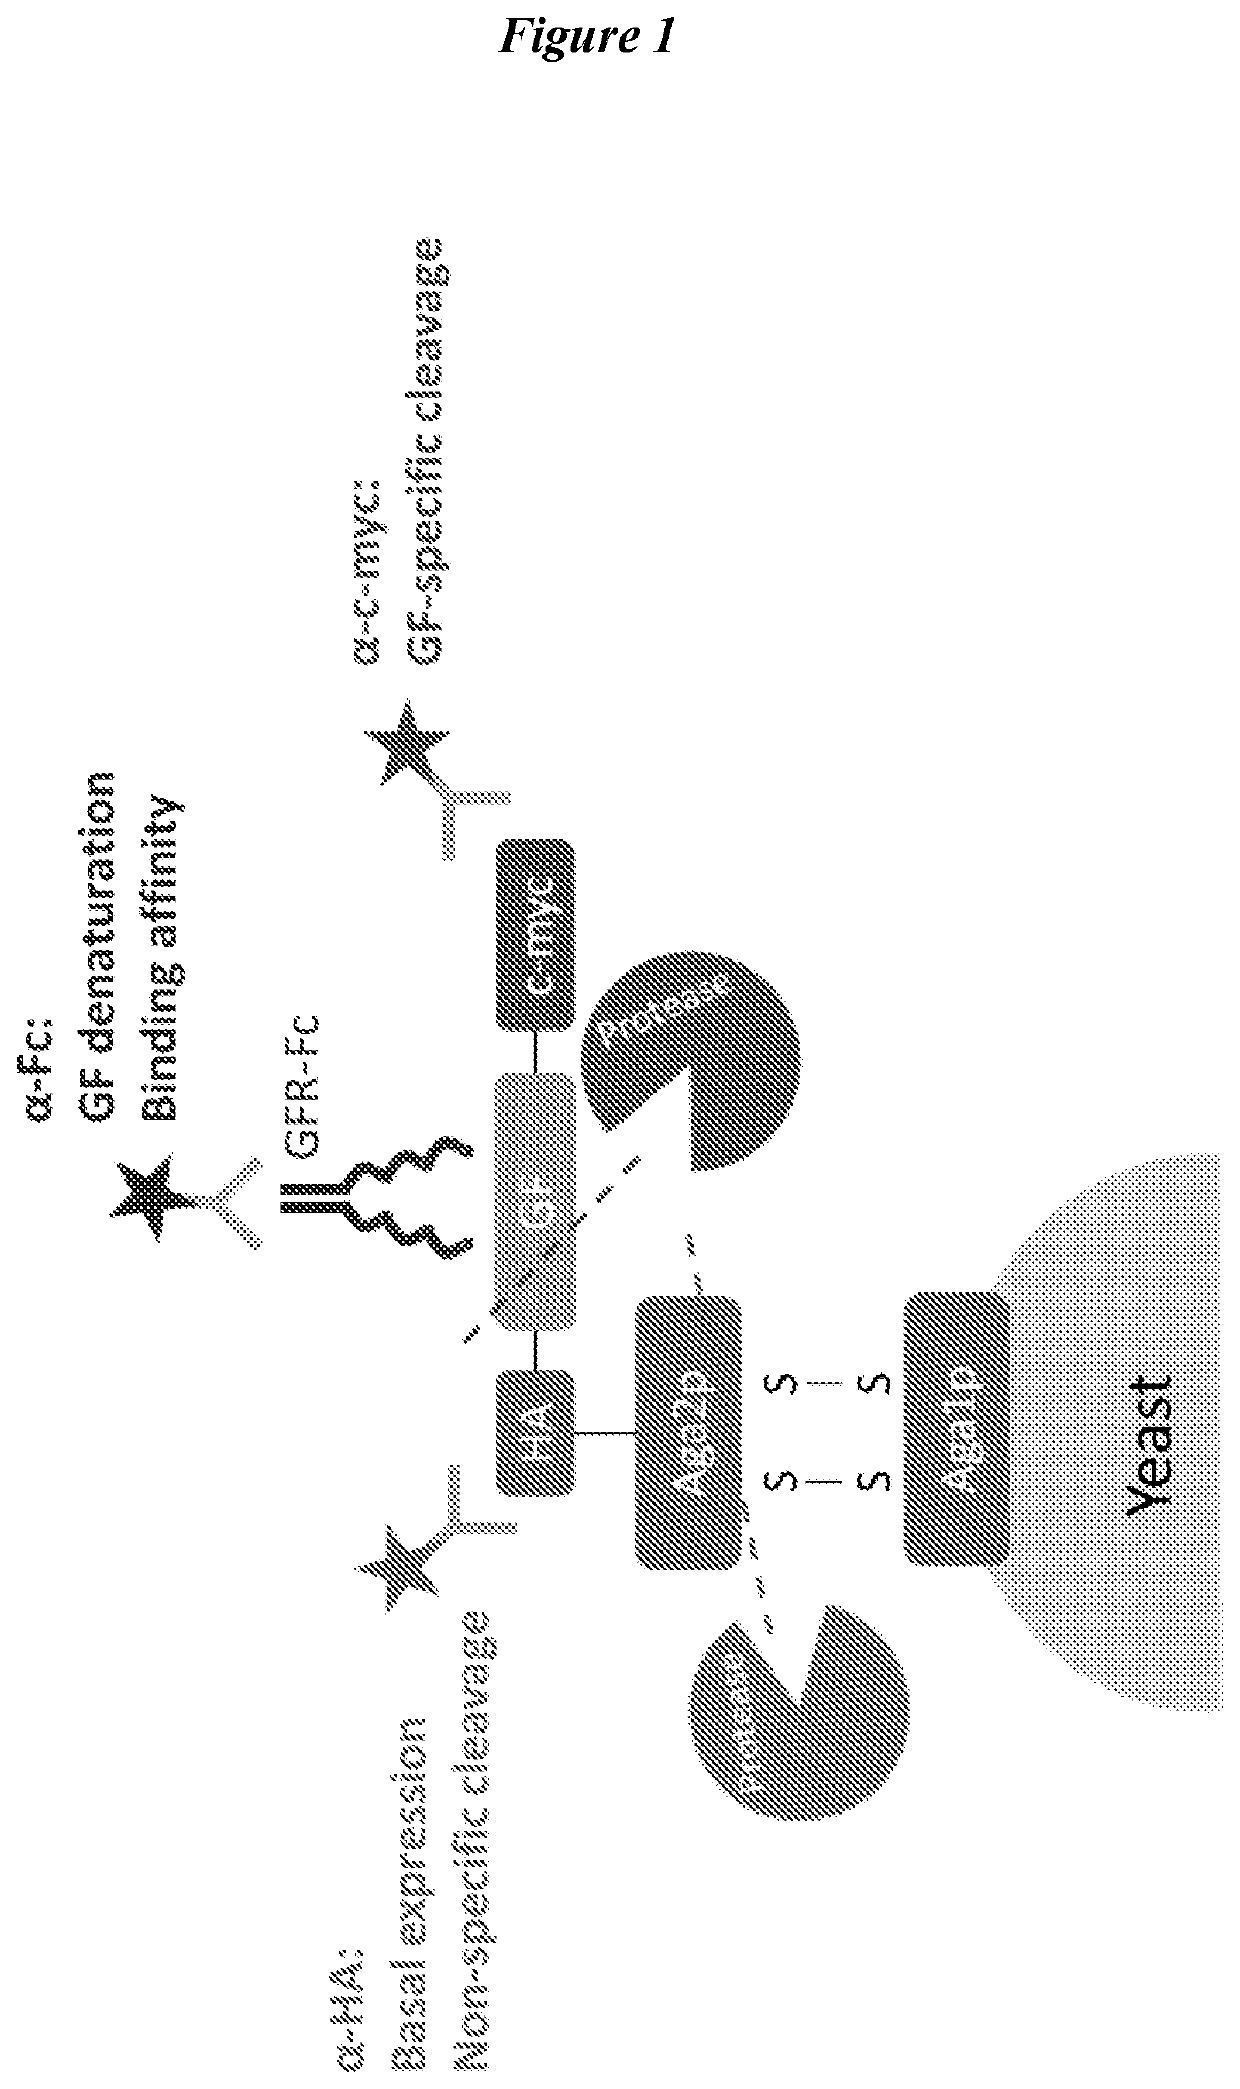 Engineered fibroblast growth factor variants as receptor antagonists